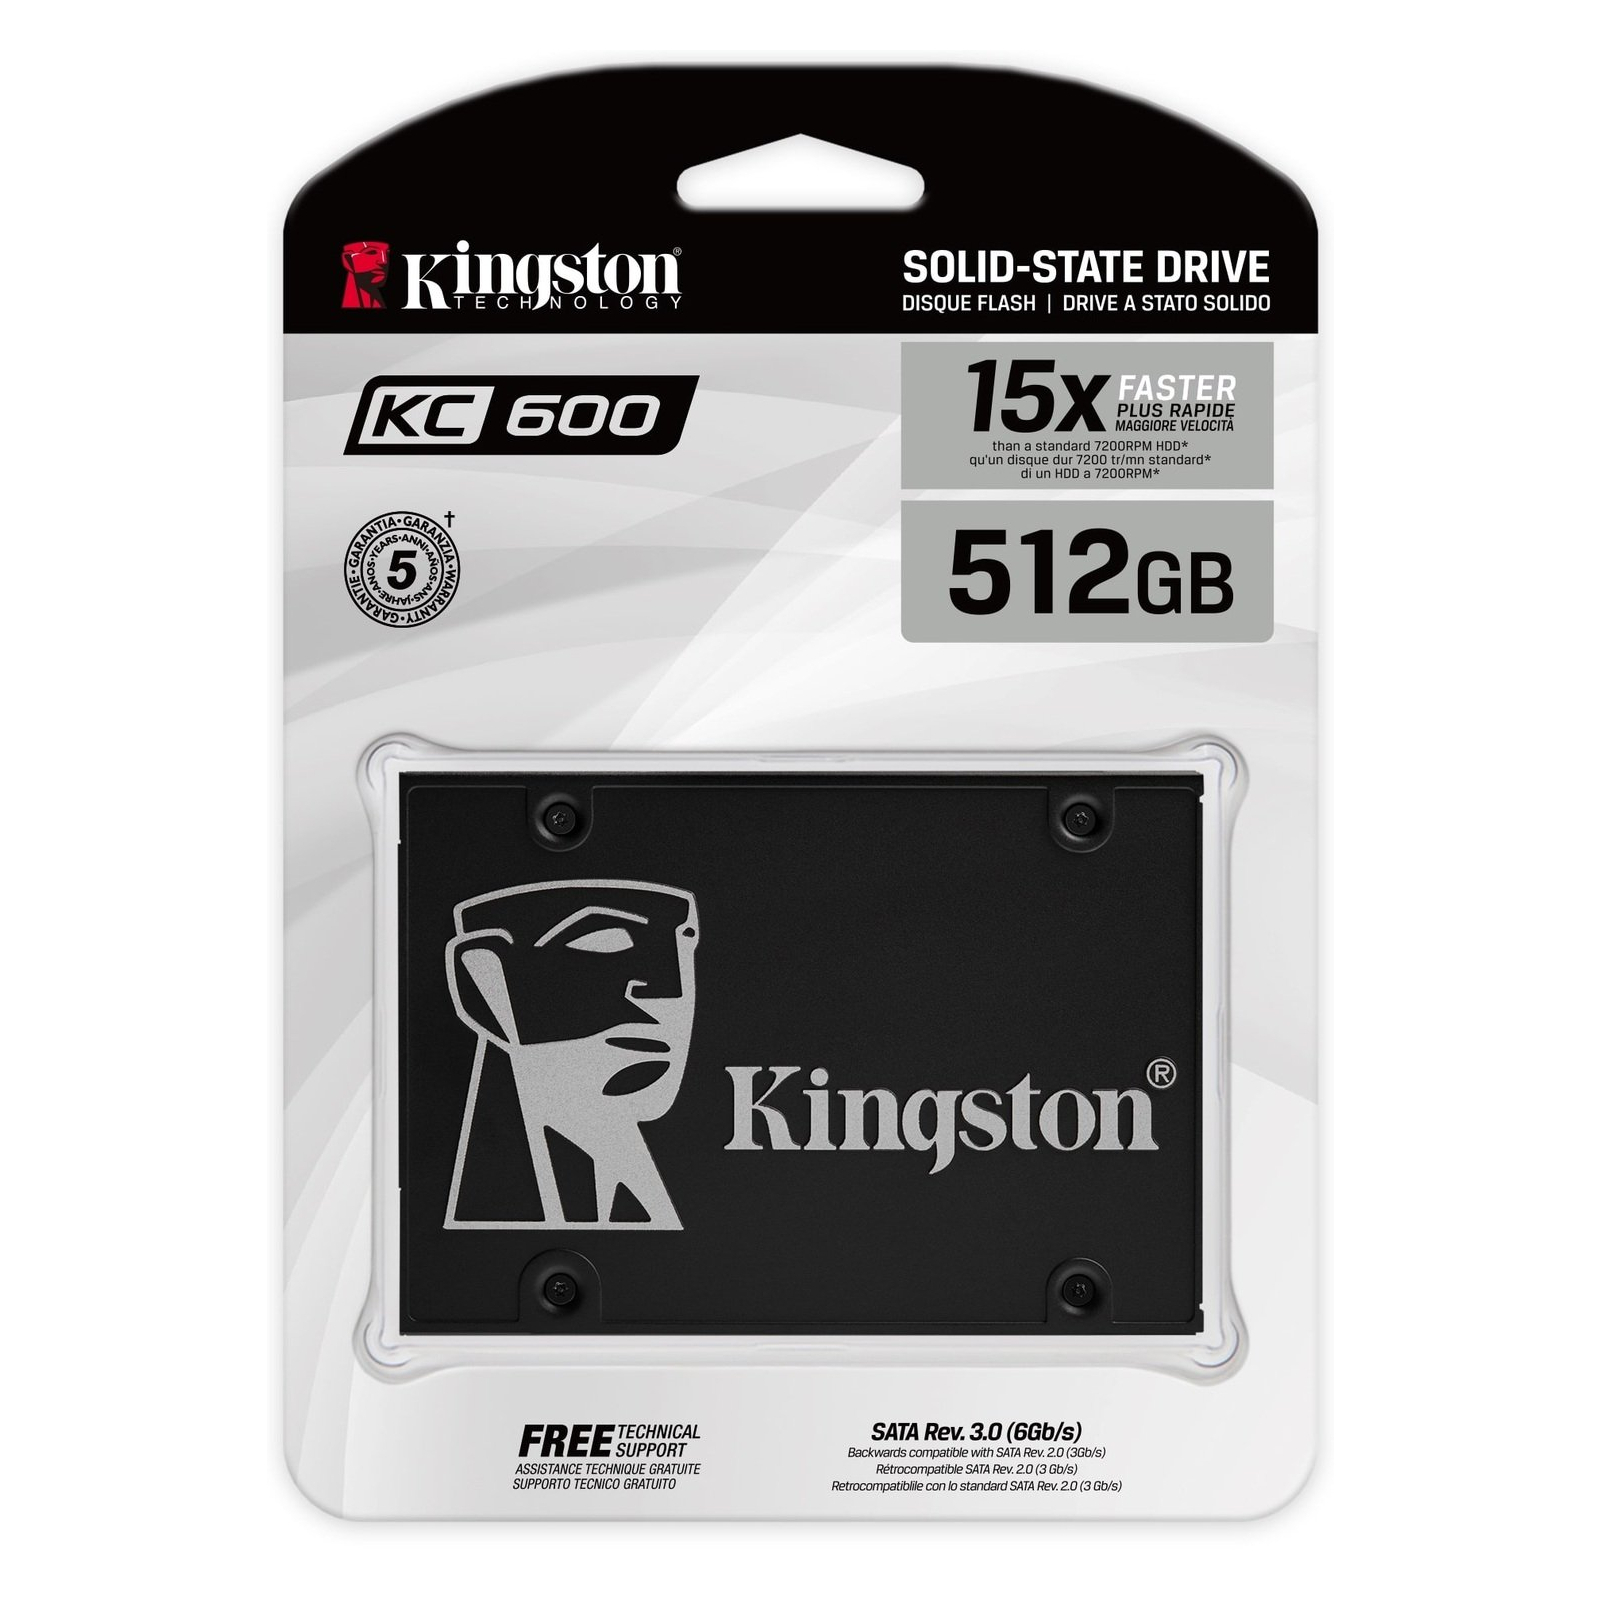 Накопитель SSD 2.5" 2TB Kingston (SKC600/2048G) изображение 3